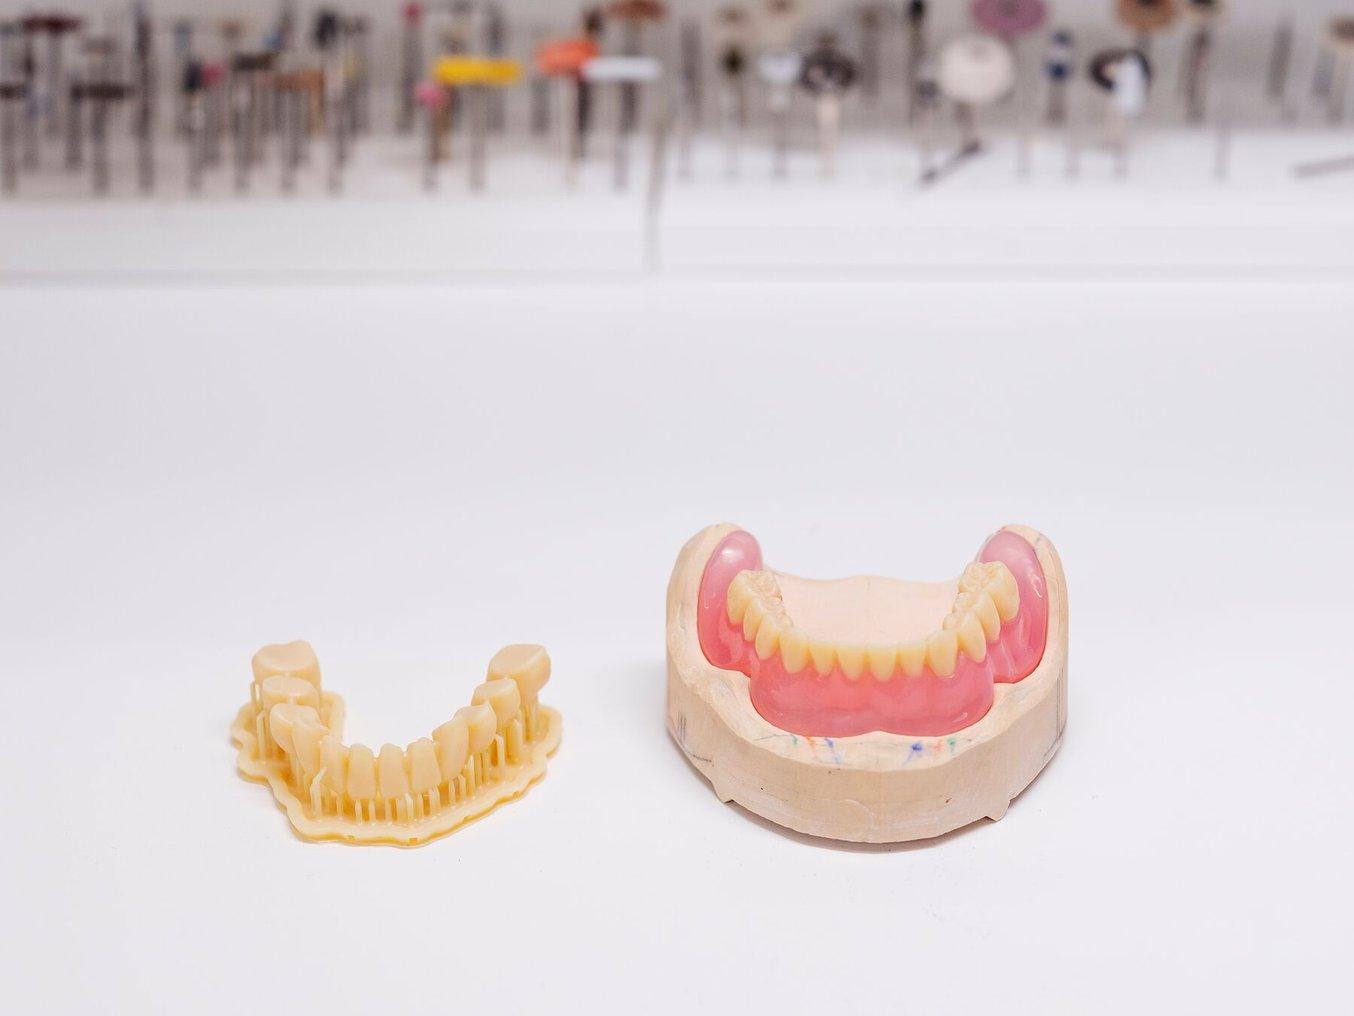 3D printed dentures teeth next to a full 3D printed mandibular denture